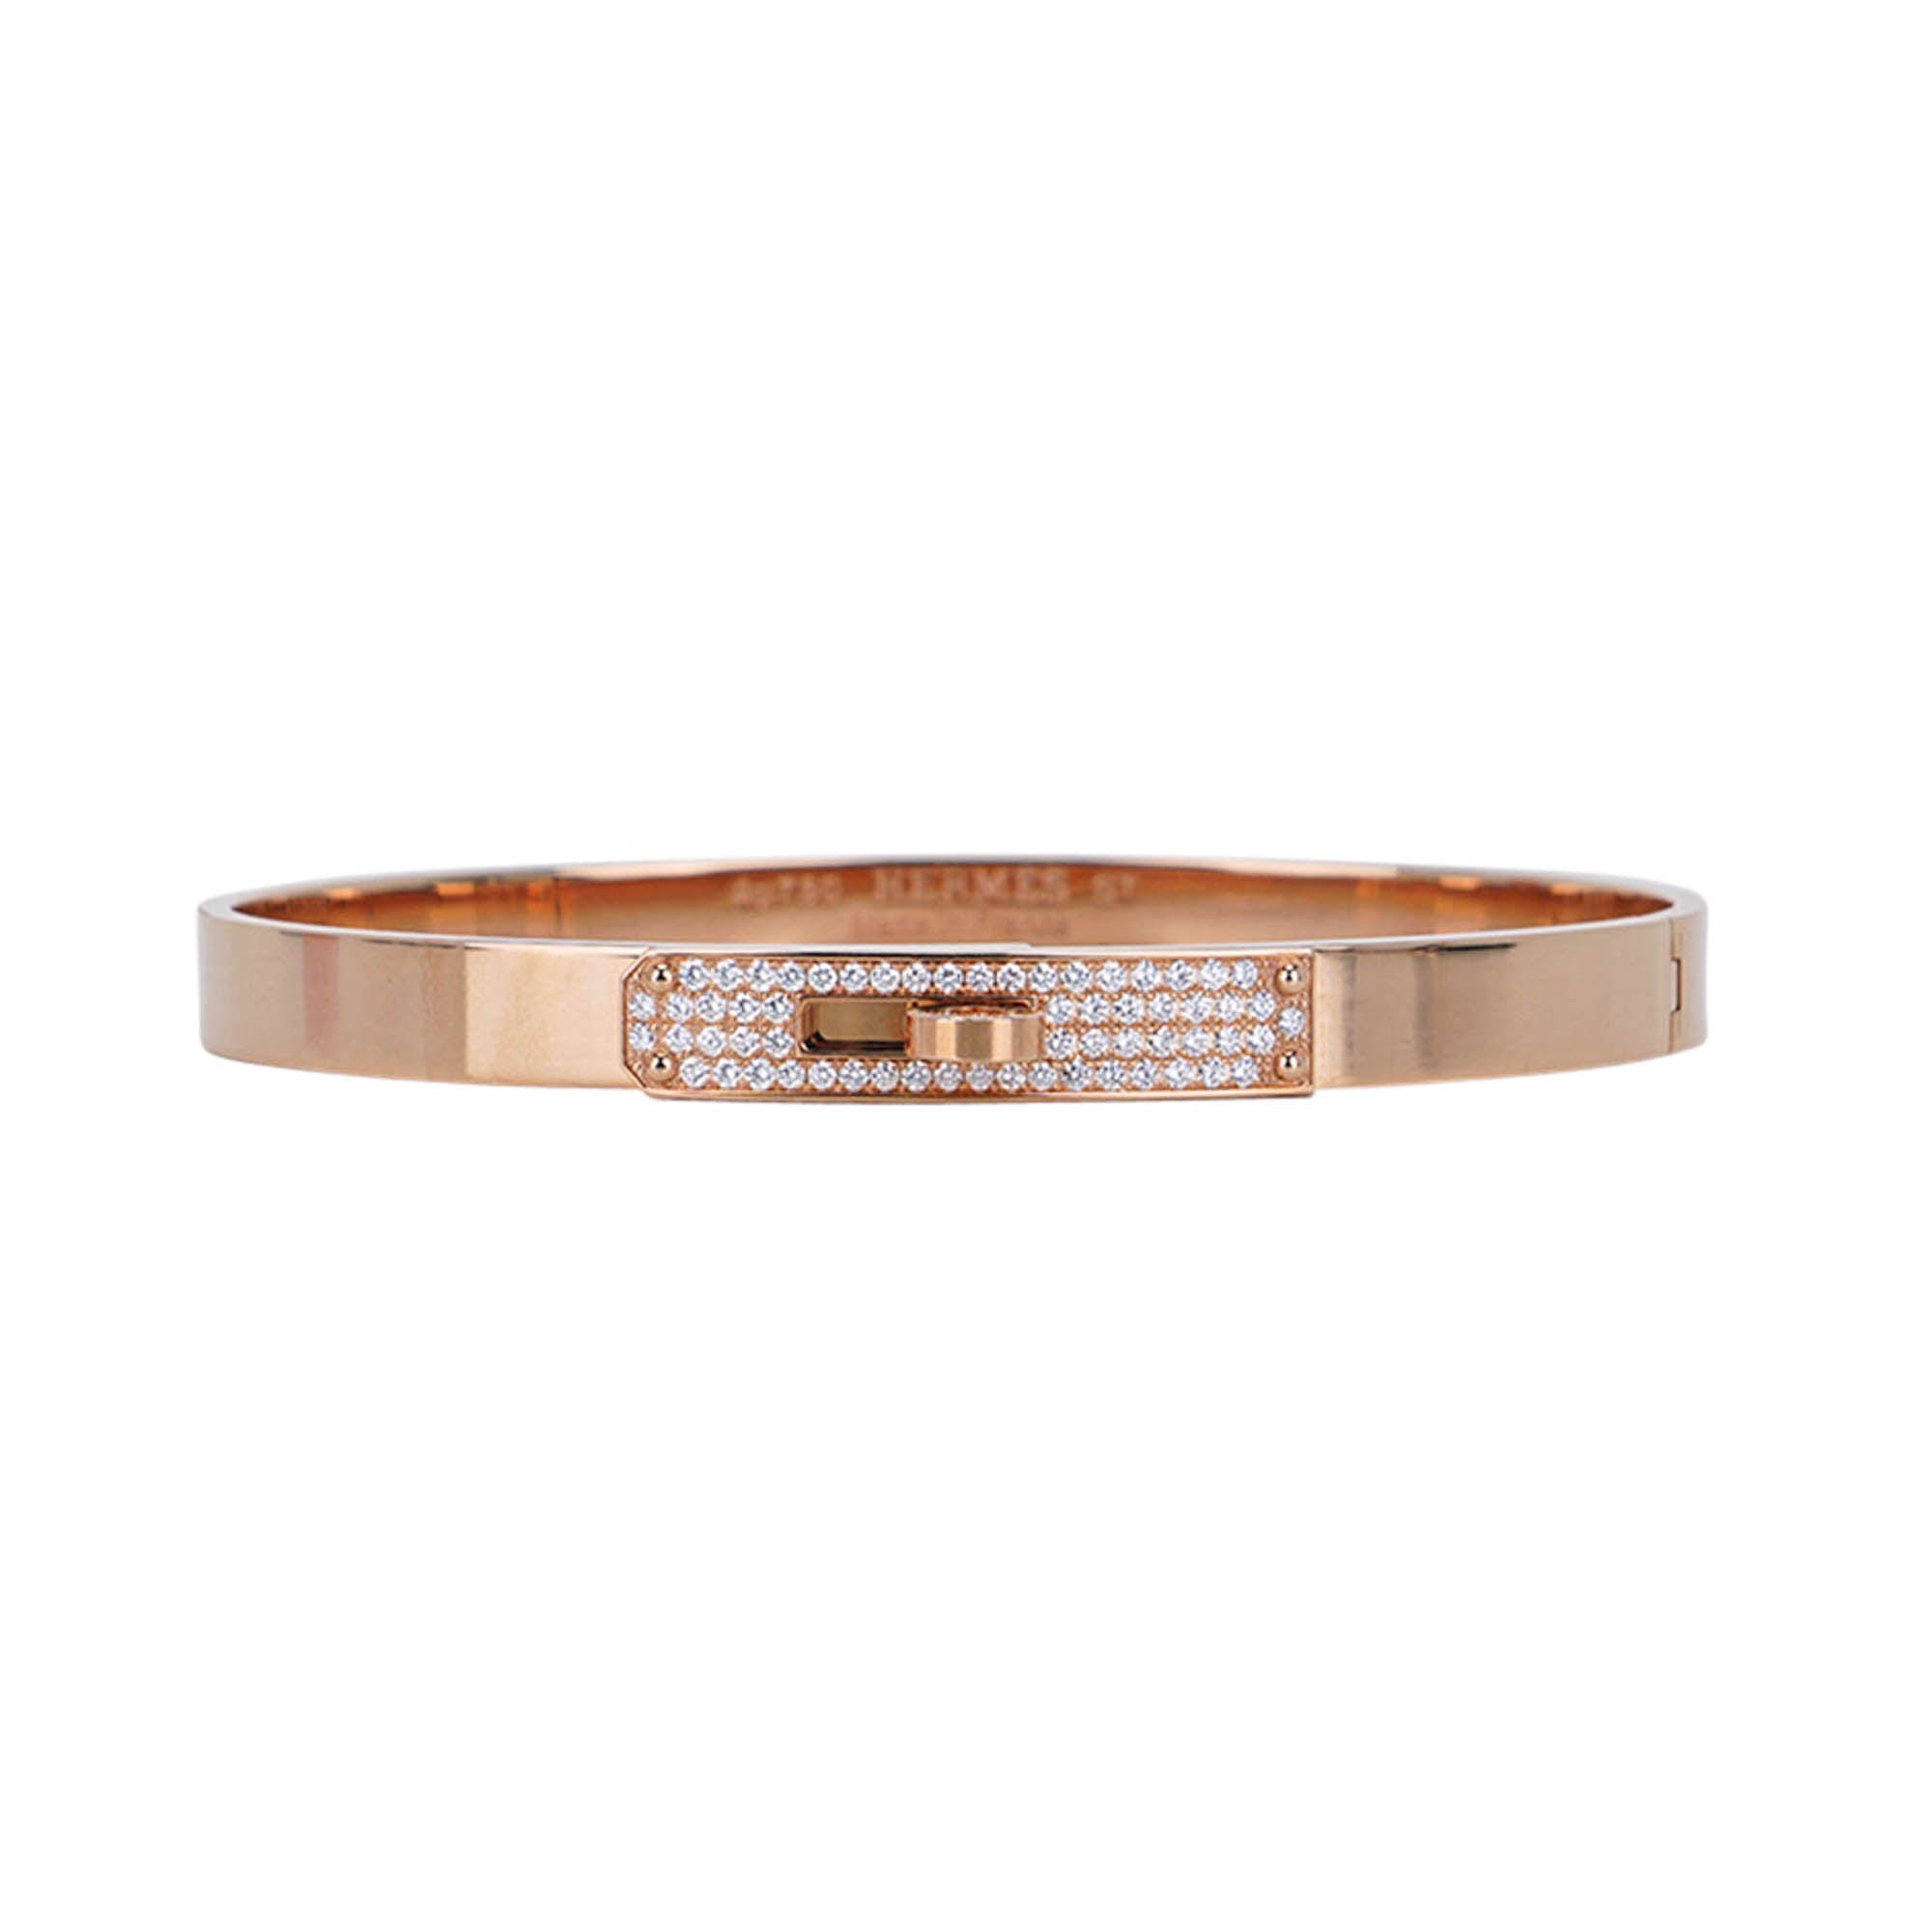 HERMES 18K Rose Gold Diamond PM Kelly Gourmette Bracelet SH 756224 |  FASHIONPHILE